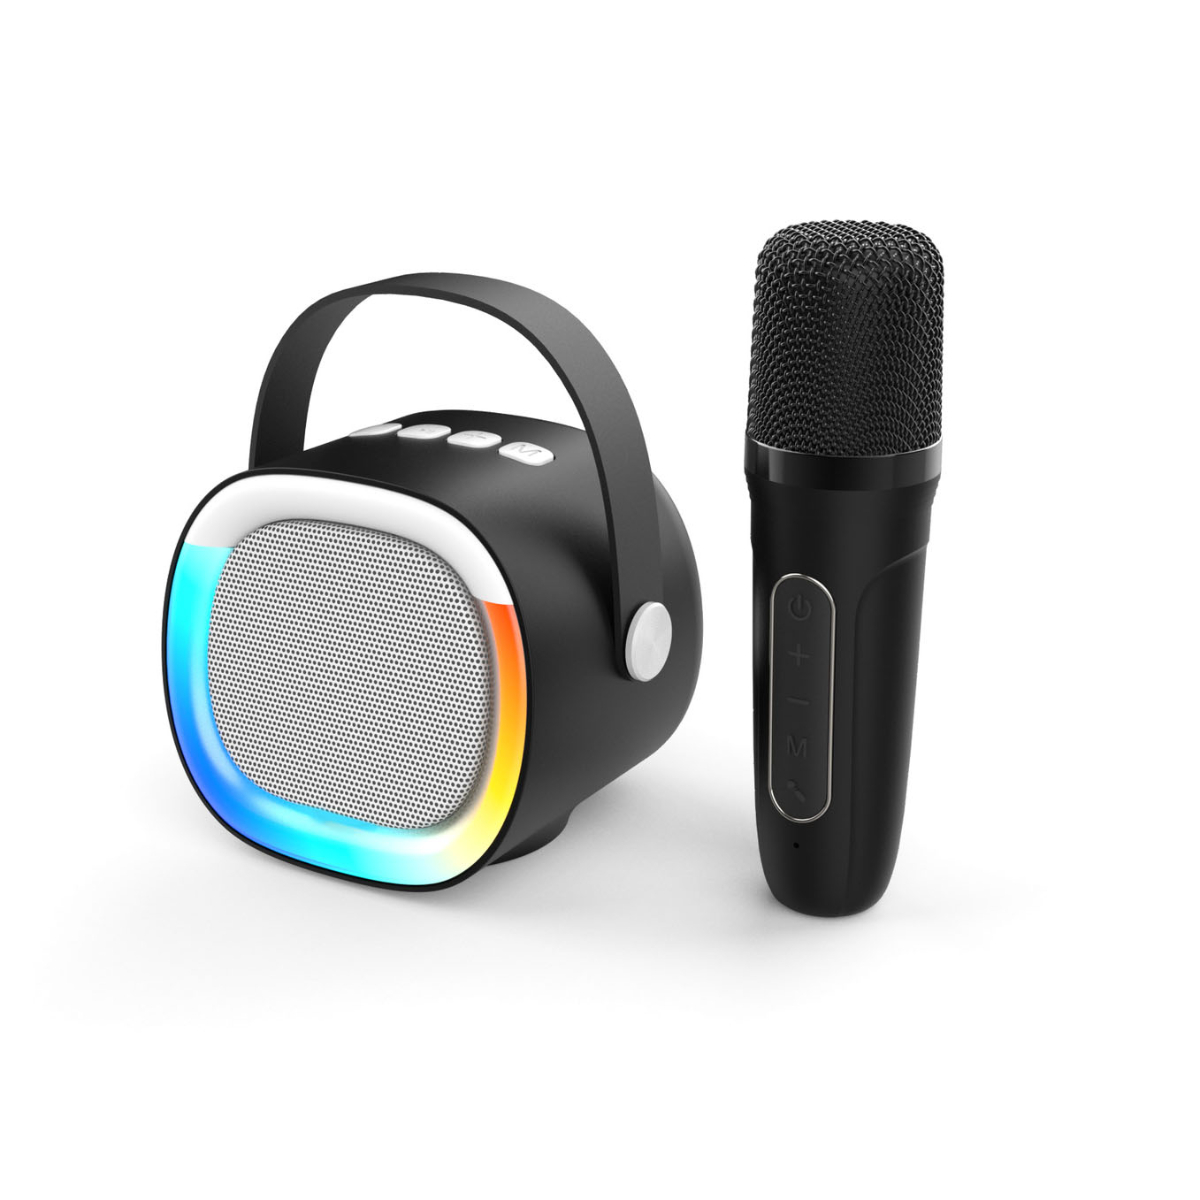 BYTELIKE Drahtloser LED-Bluetooth-Lautsprecher mit Mikrofon, Sprachansagen, Bluetooth-Lautsprecher, Blau Tragbar Anruffunktion